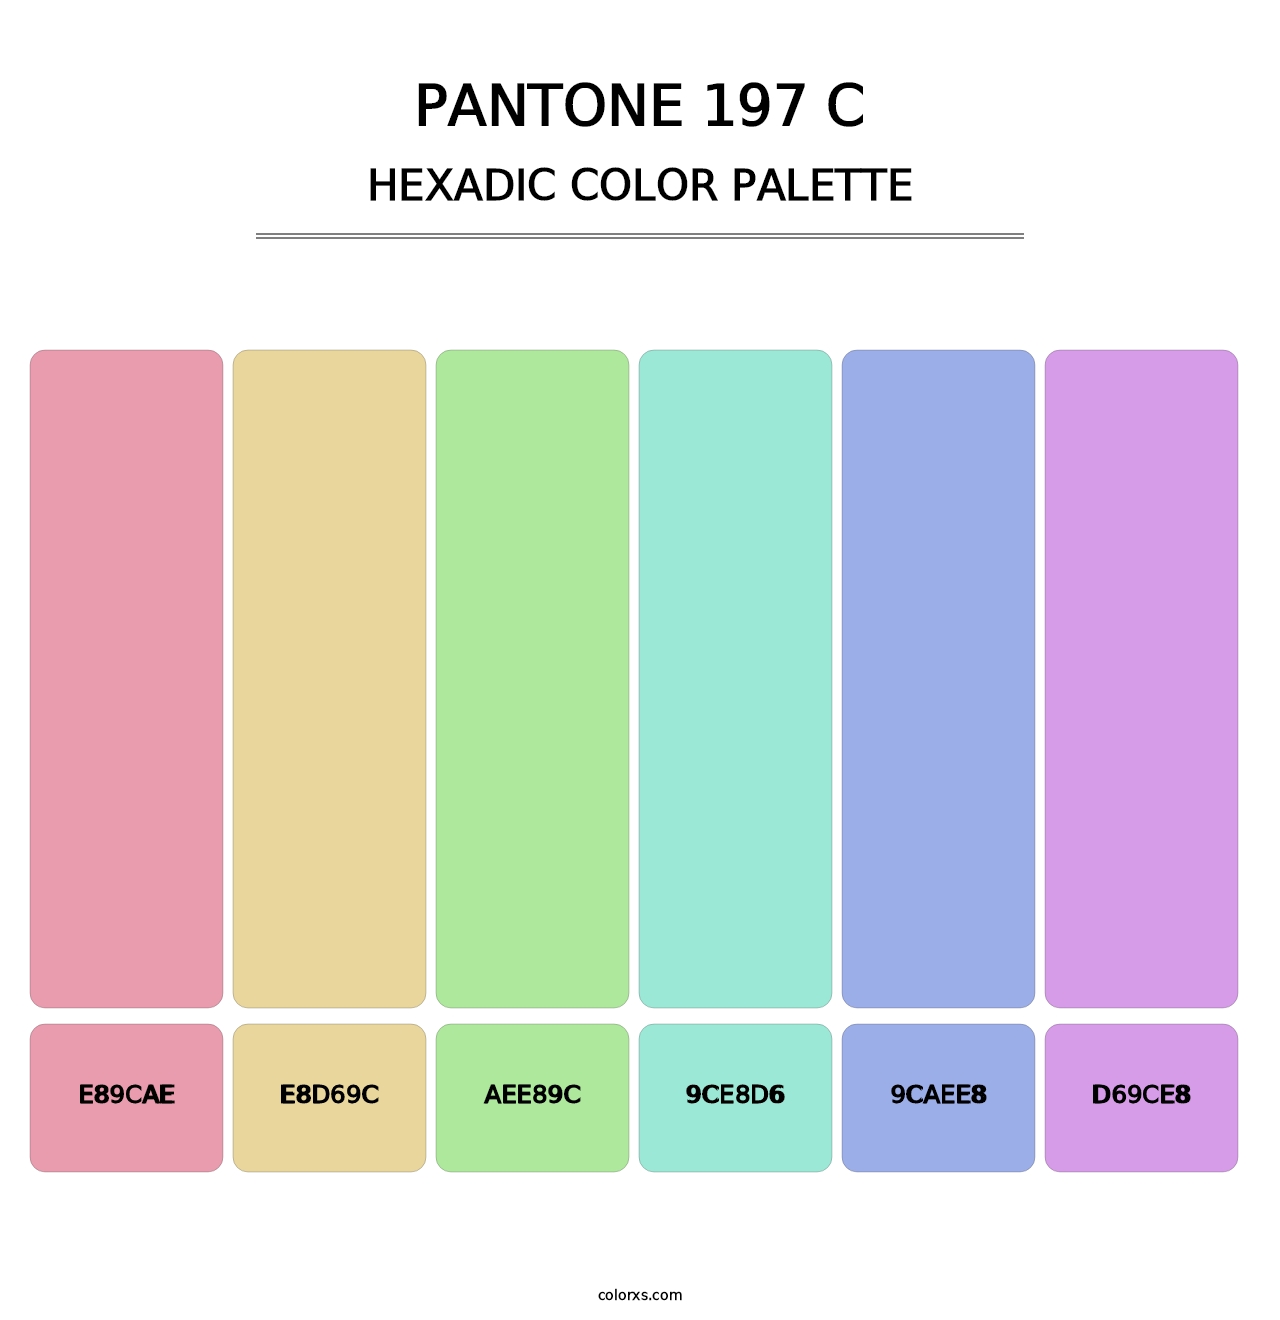 PANTONE 197 C - Hexadic Color Palette